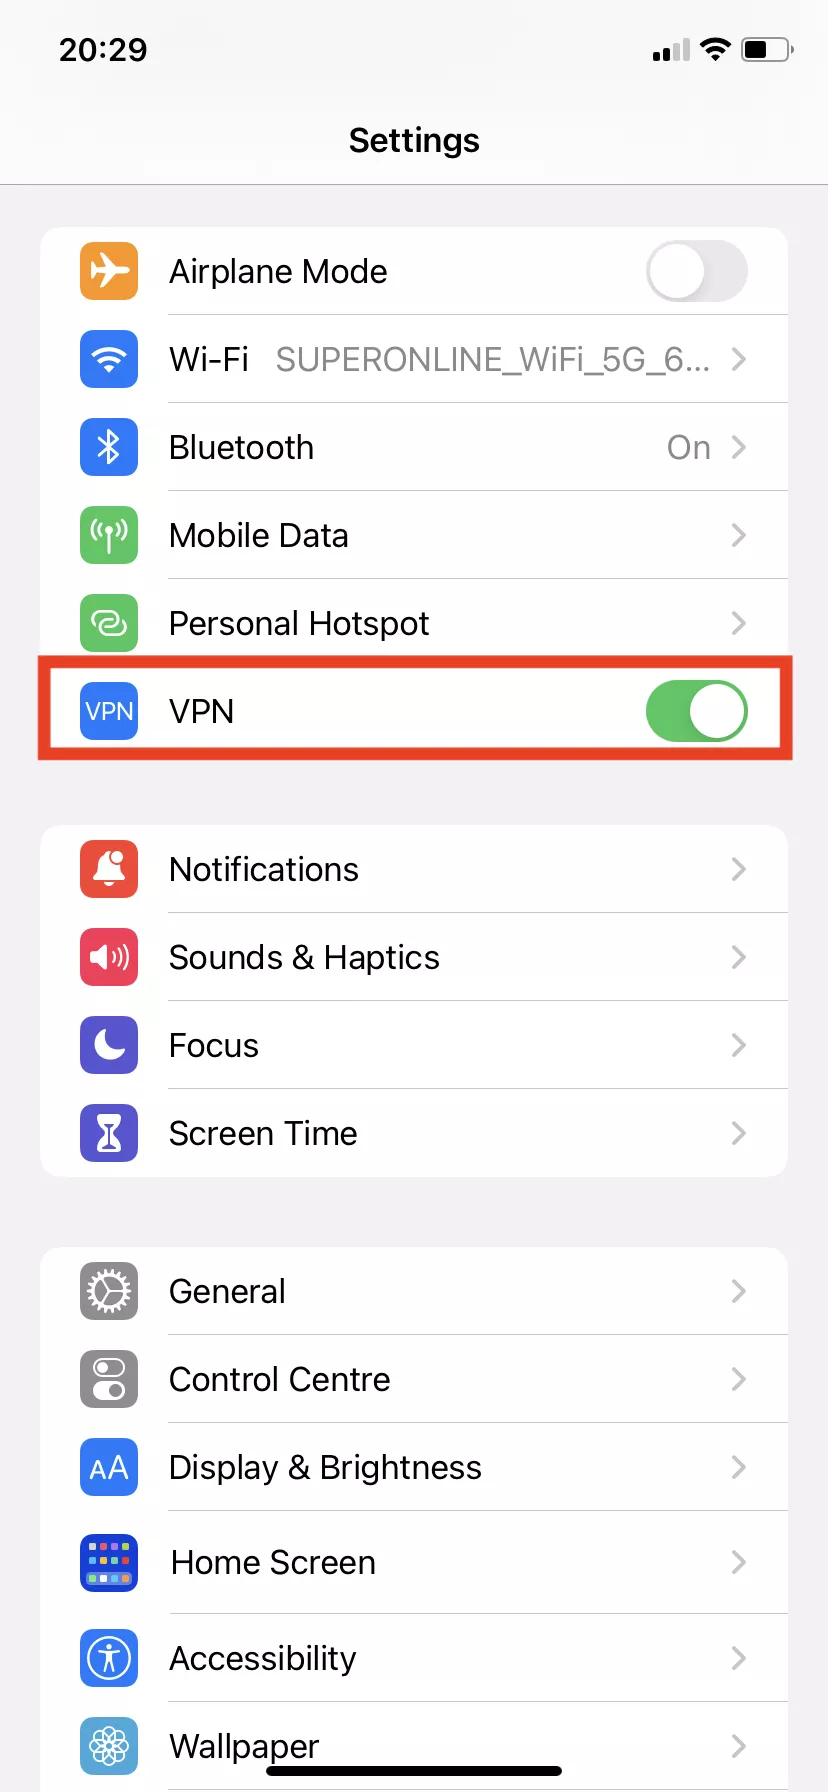 How do I setup a VPN on my iPhone?